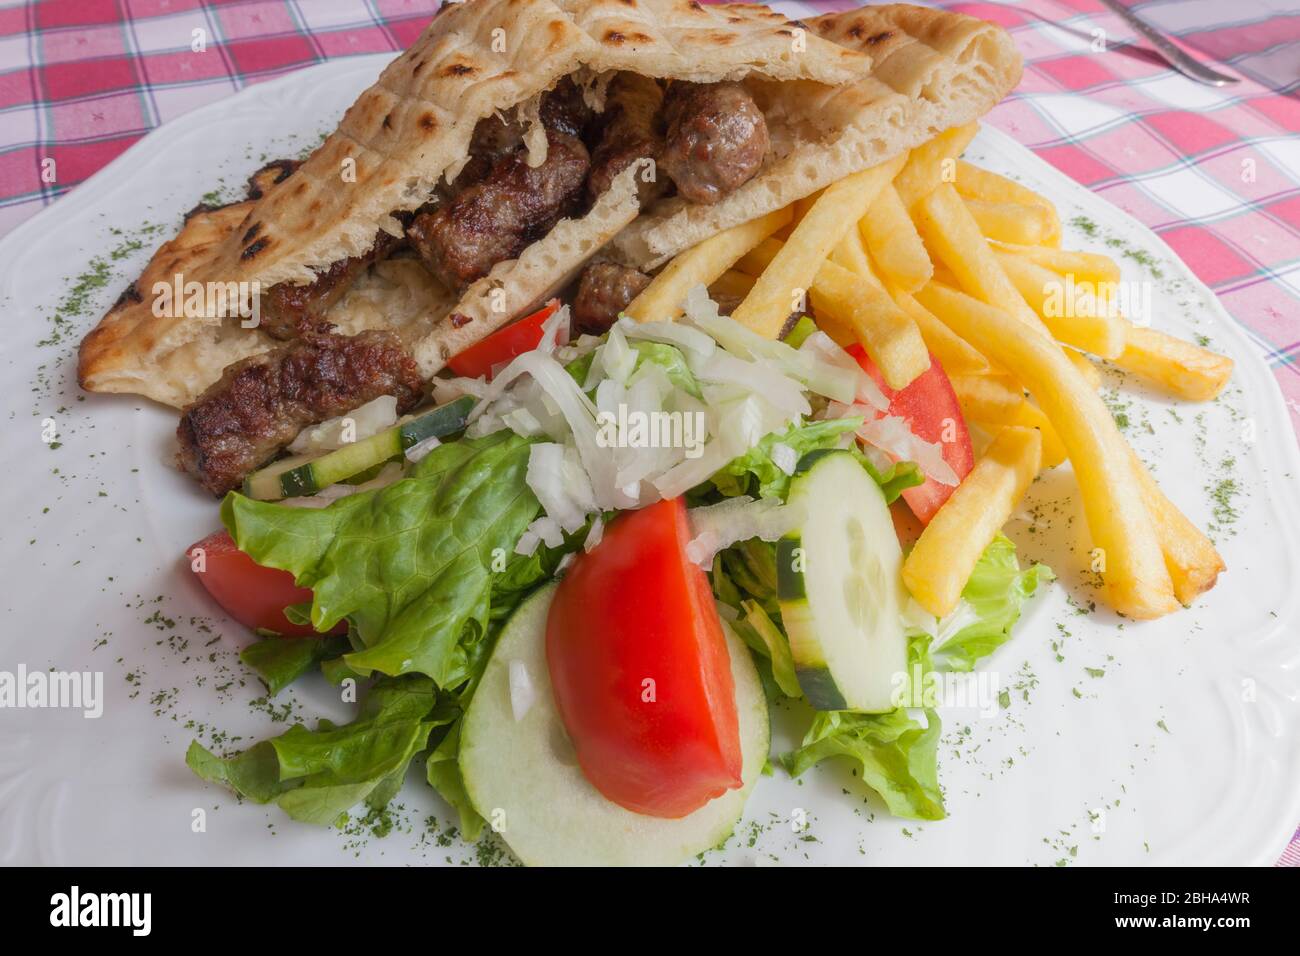 Europe, Bosnia and Erzegovina, Medjugorje. Cevapcici and vegetables. Popular food of Balkans Stock Photo